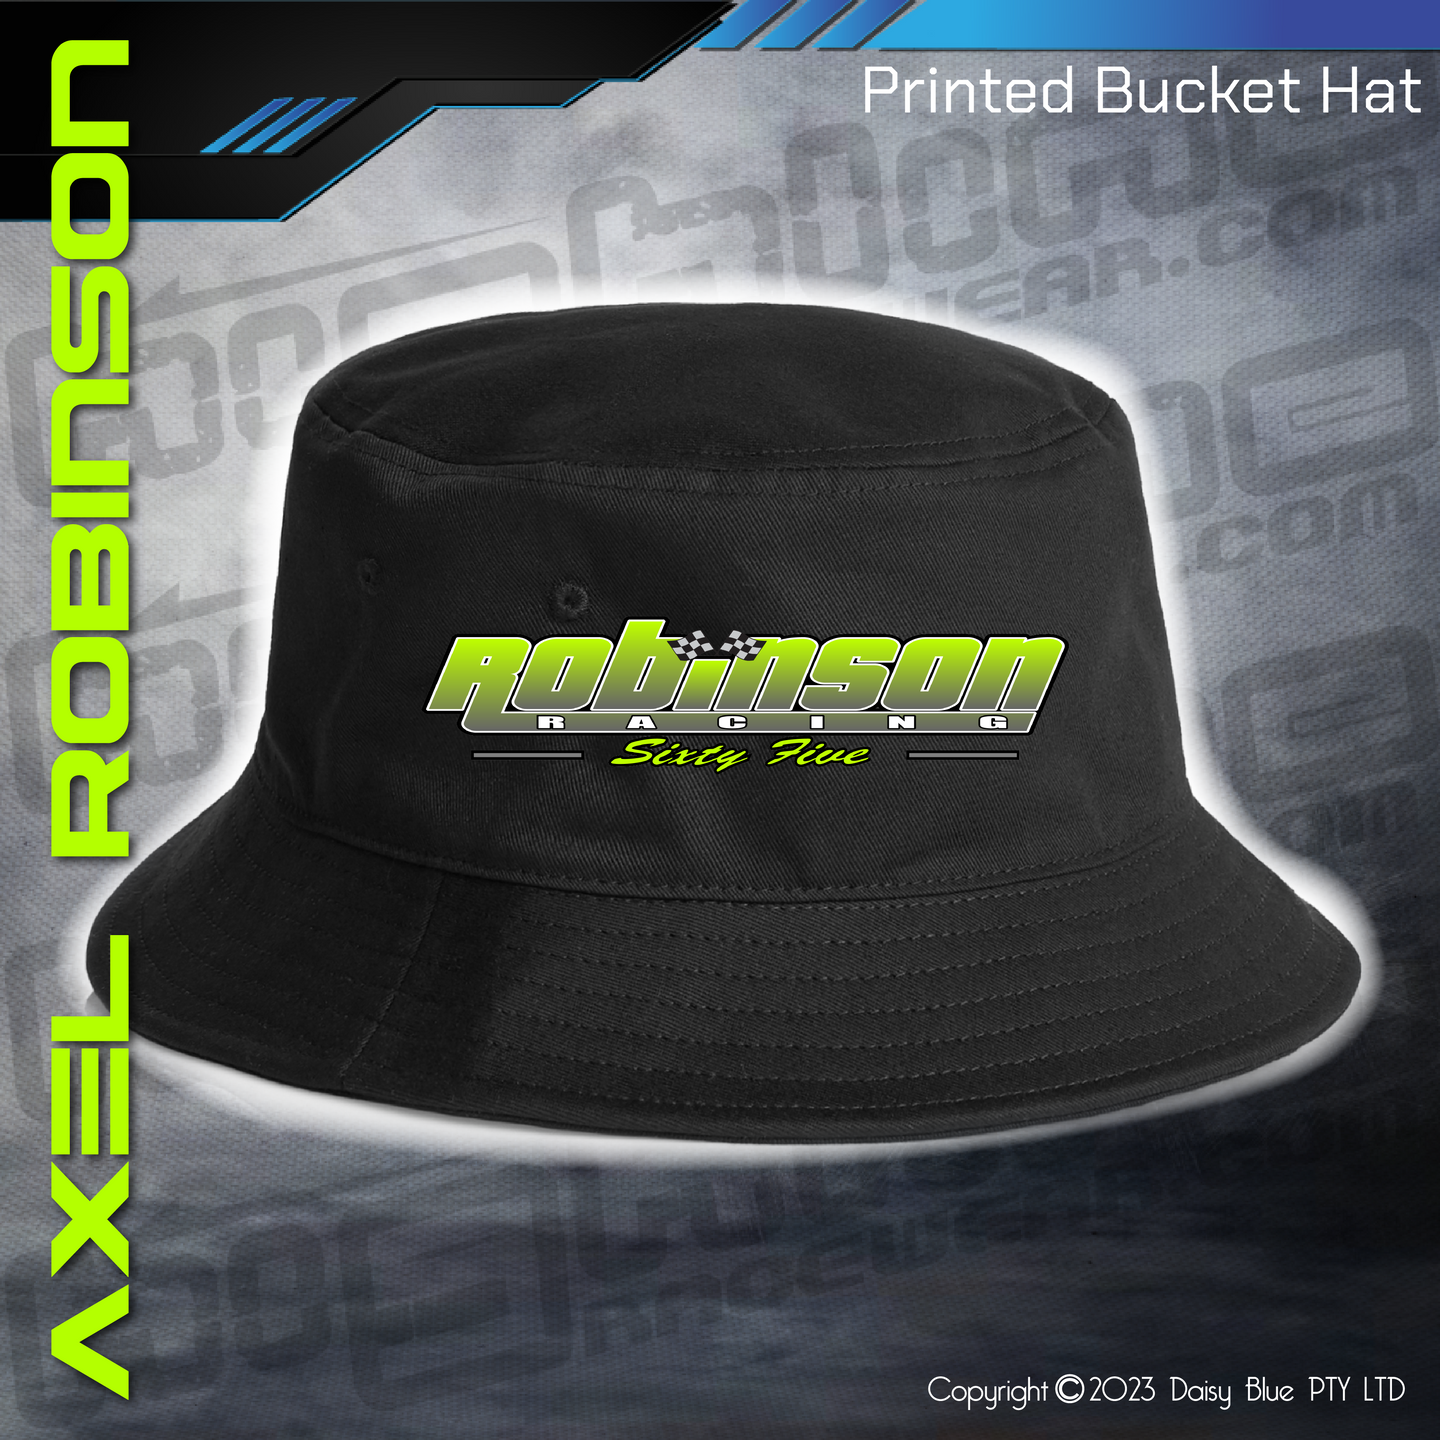 Printed Bucket Hat - Axel Robinson